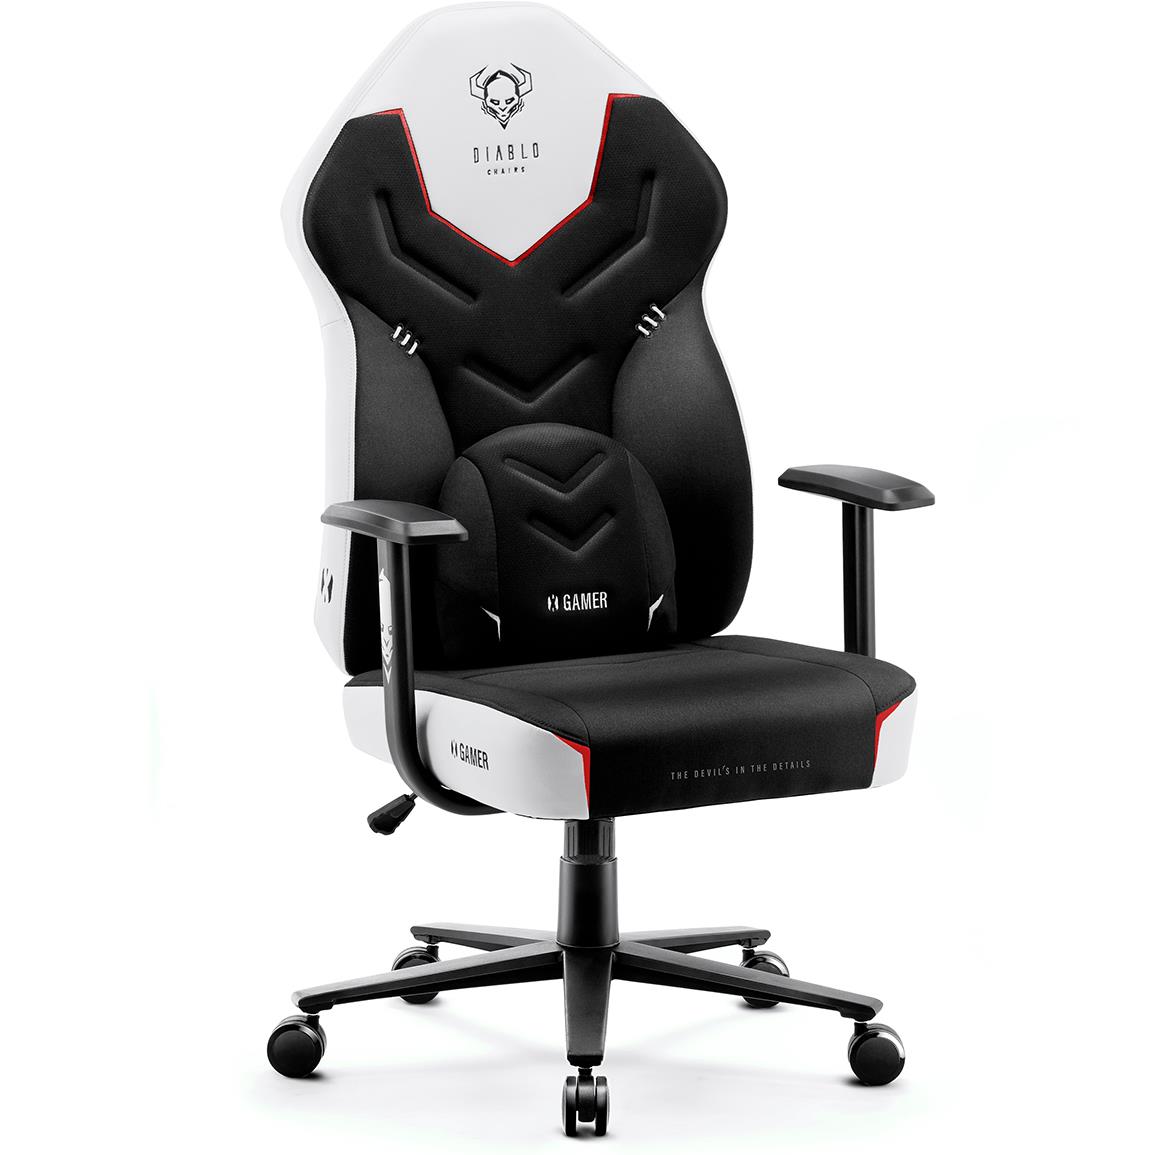 Diablo X-Gamer 2.0 kancelarijska stolica 68x56x118 cm crno bela